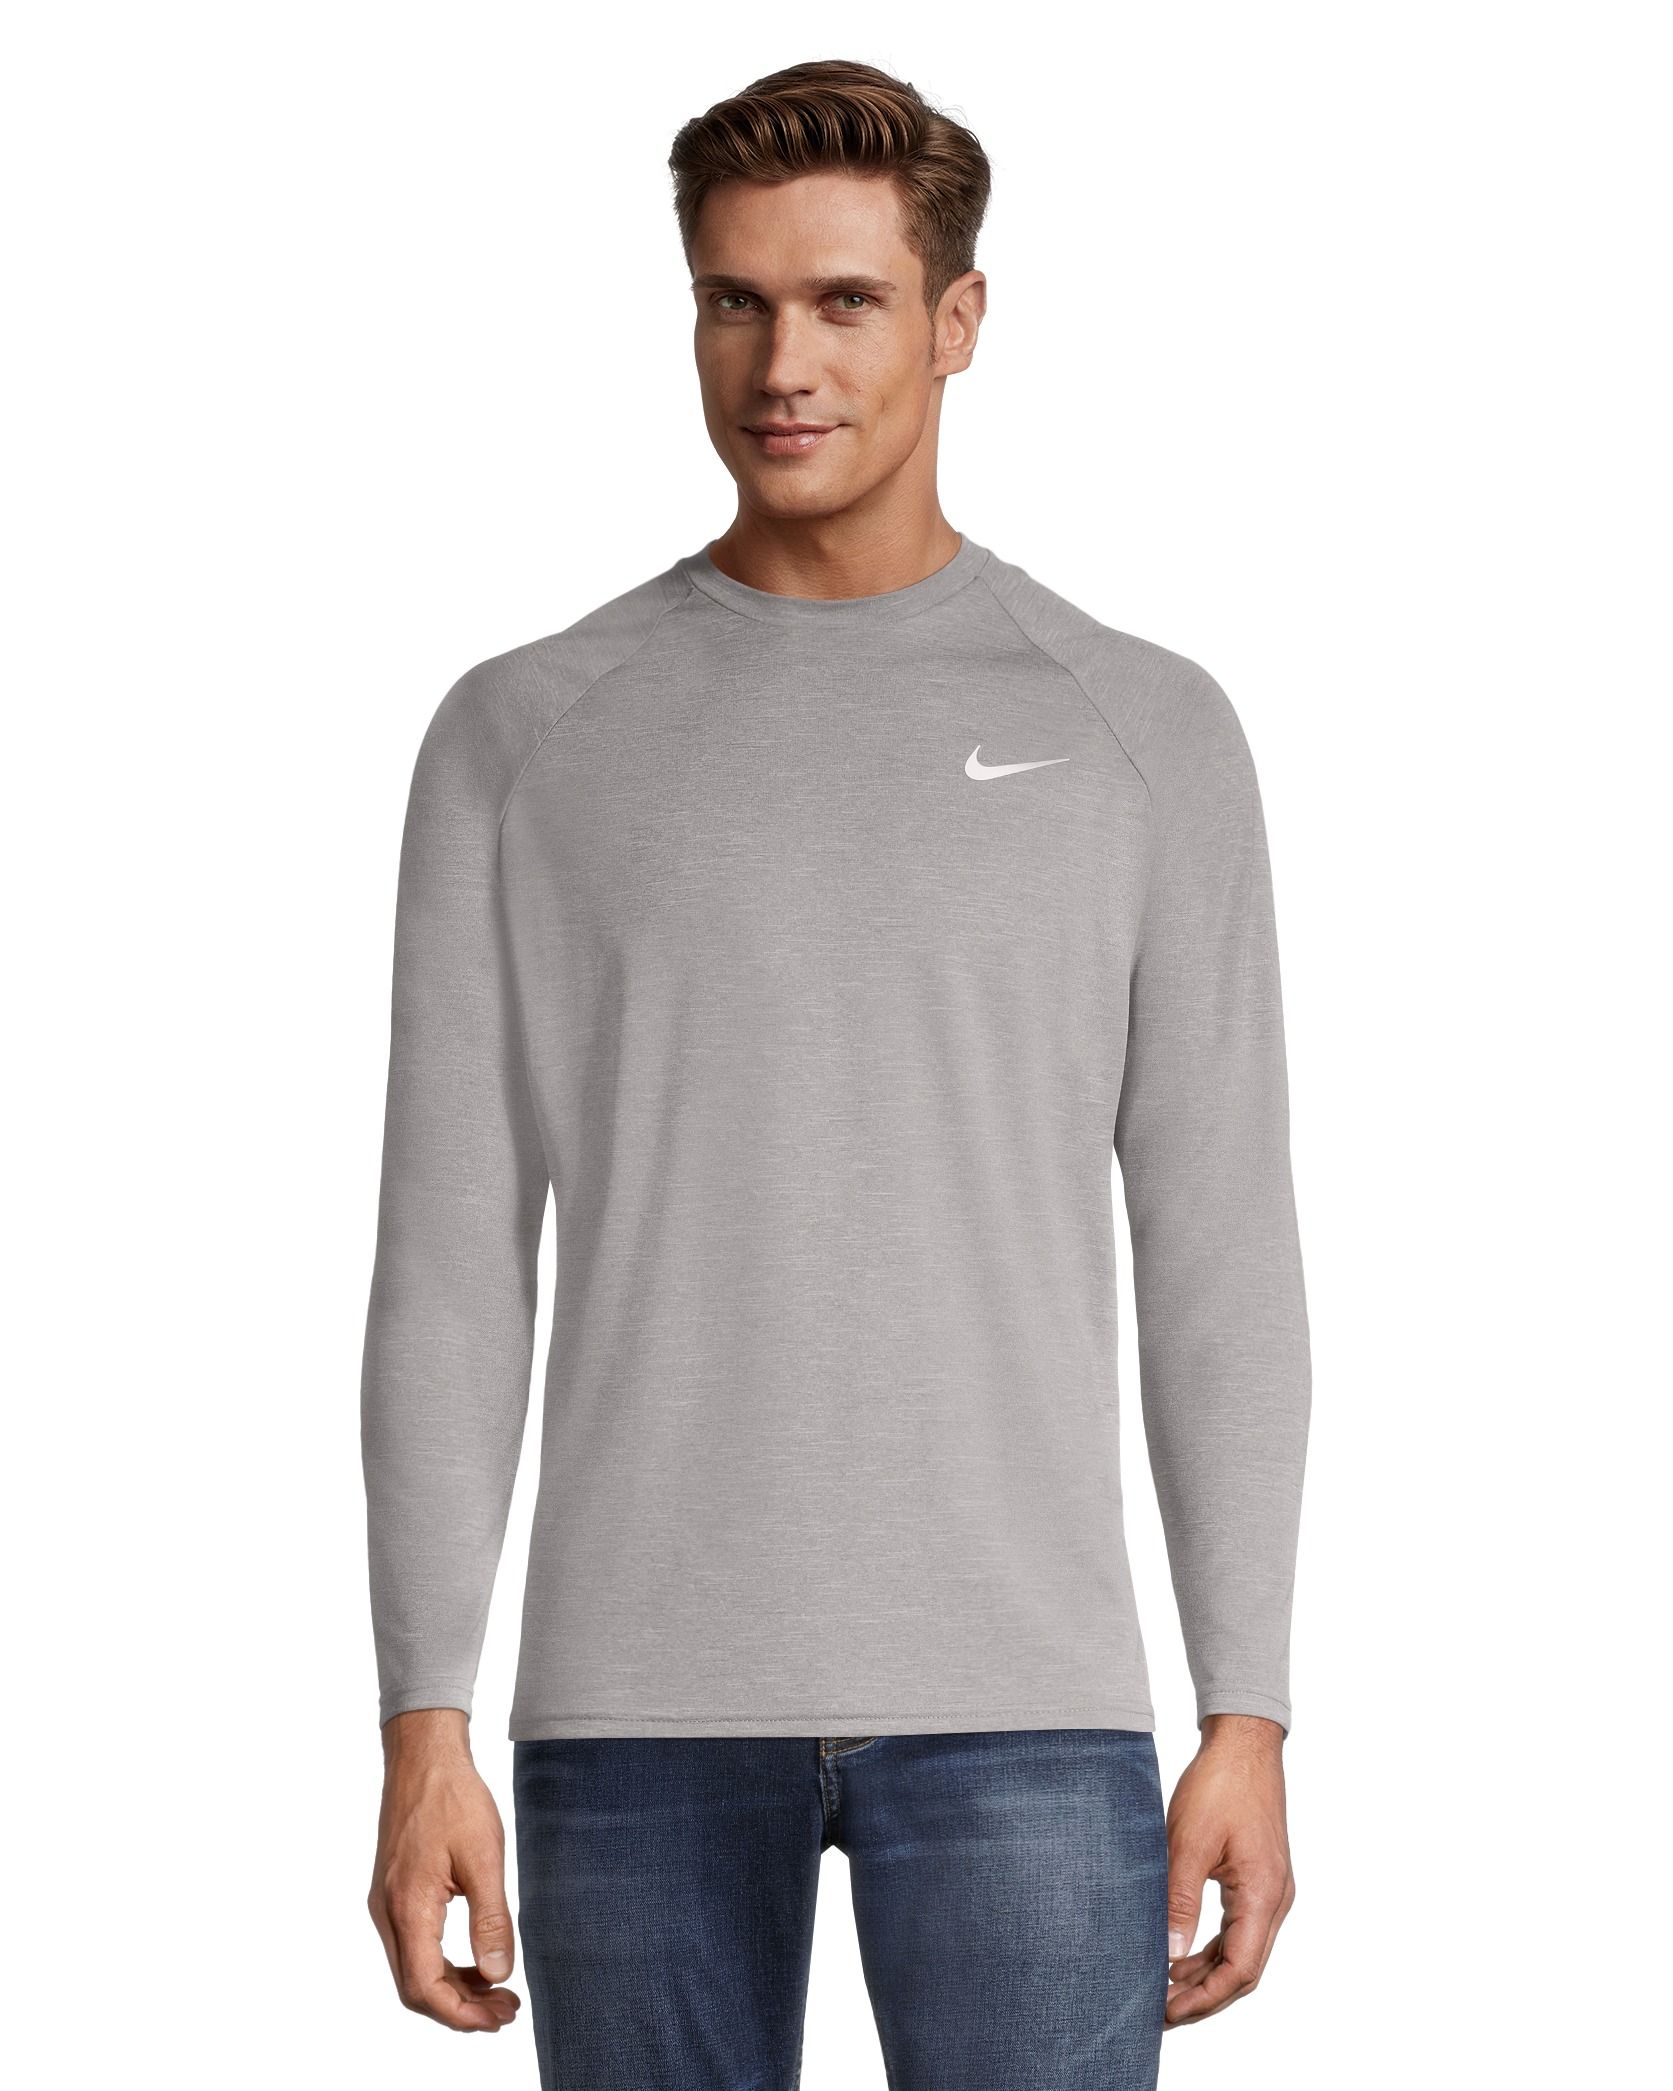 Custom Made Nike Men's Game Royal / White Pro Tight Long-Sleeve T-Shirt